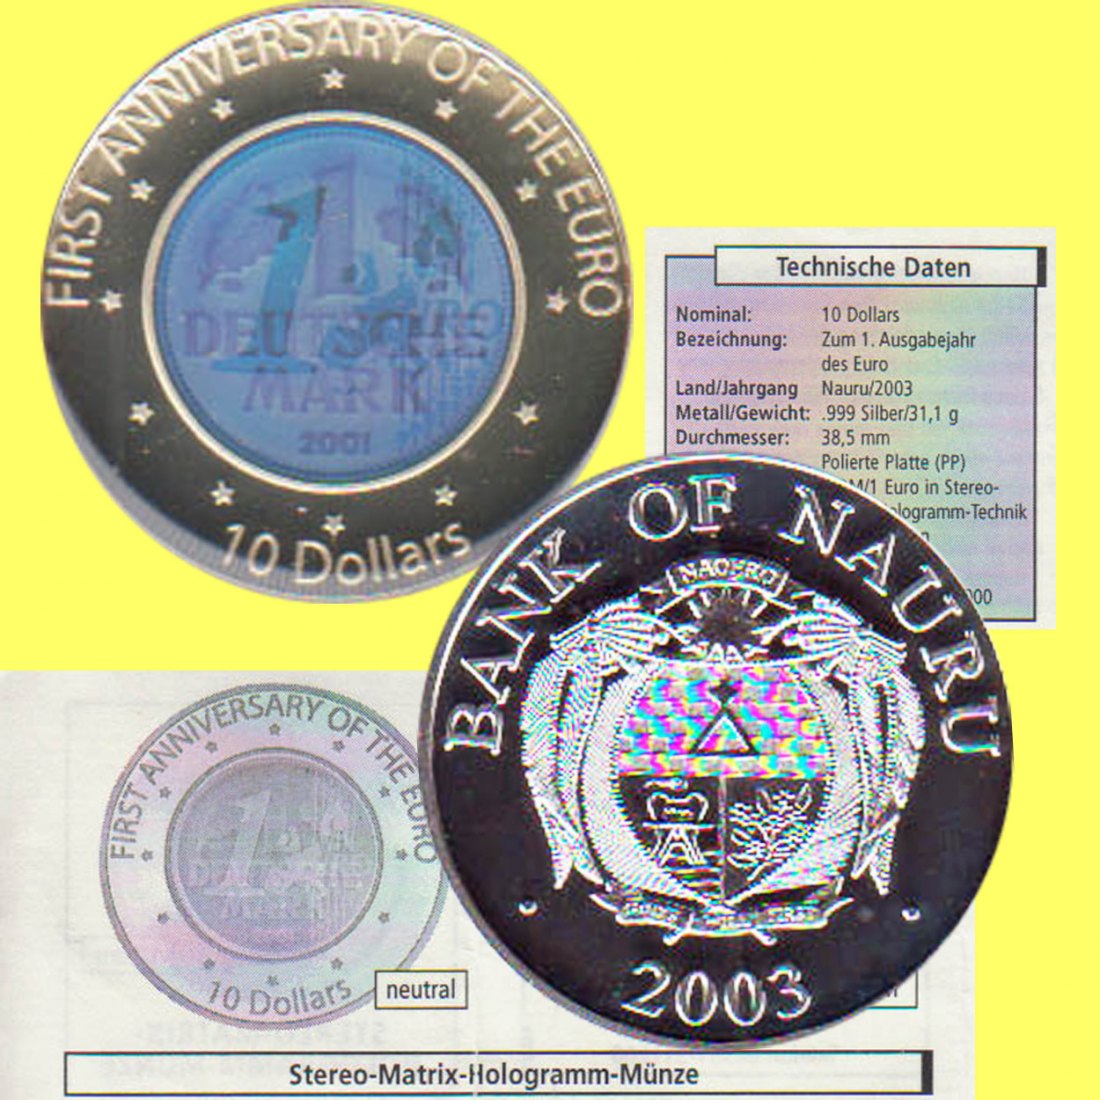  Nauru 10$-Silbermünze *1. Stereo-Matrix-Hologramm-Münze - 1€/1DM* 2003 1oz PP nur 5.000St!   